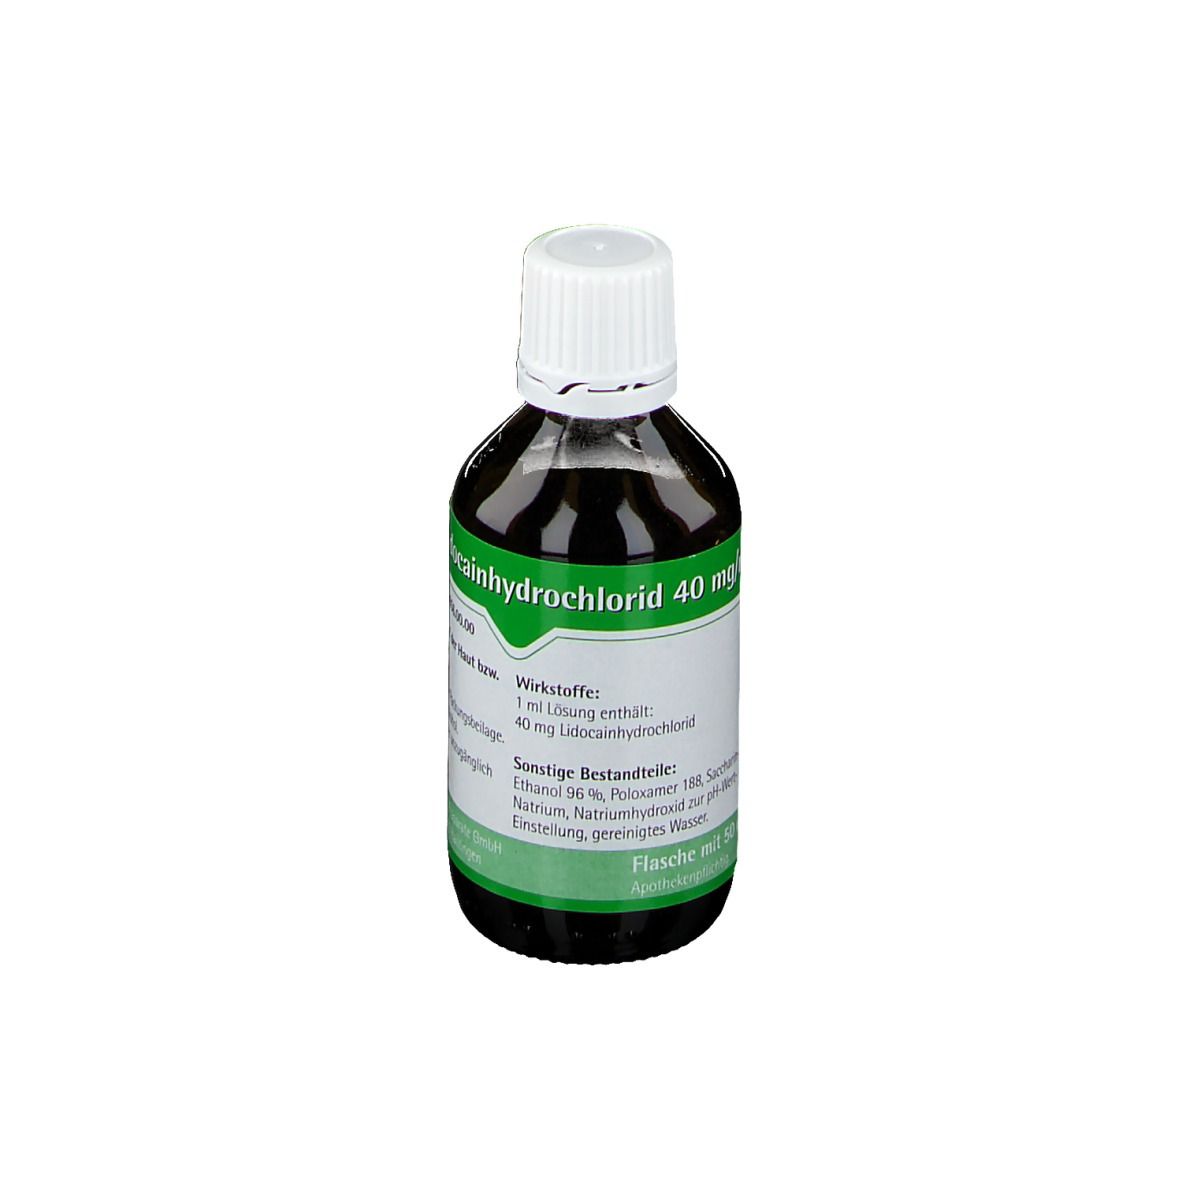 ACOIN®- Lidocainhydrochlorid 40 mg/ml